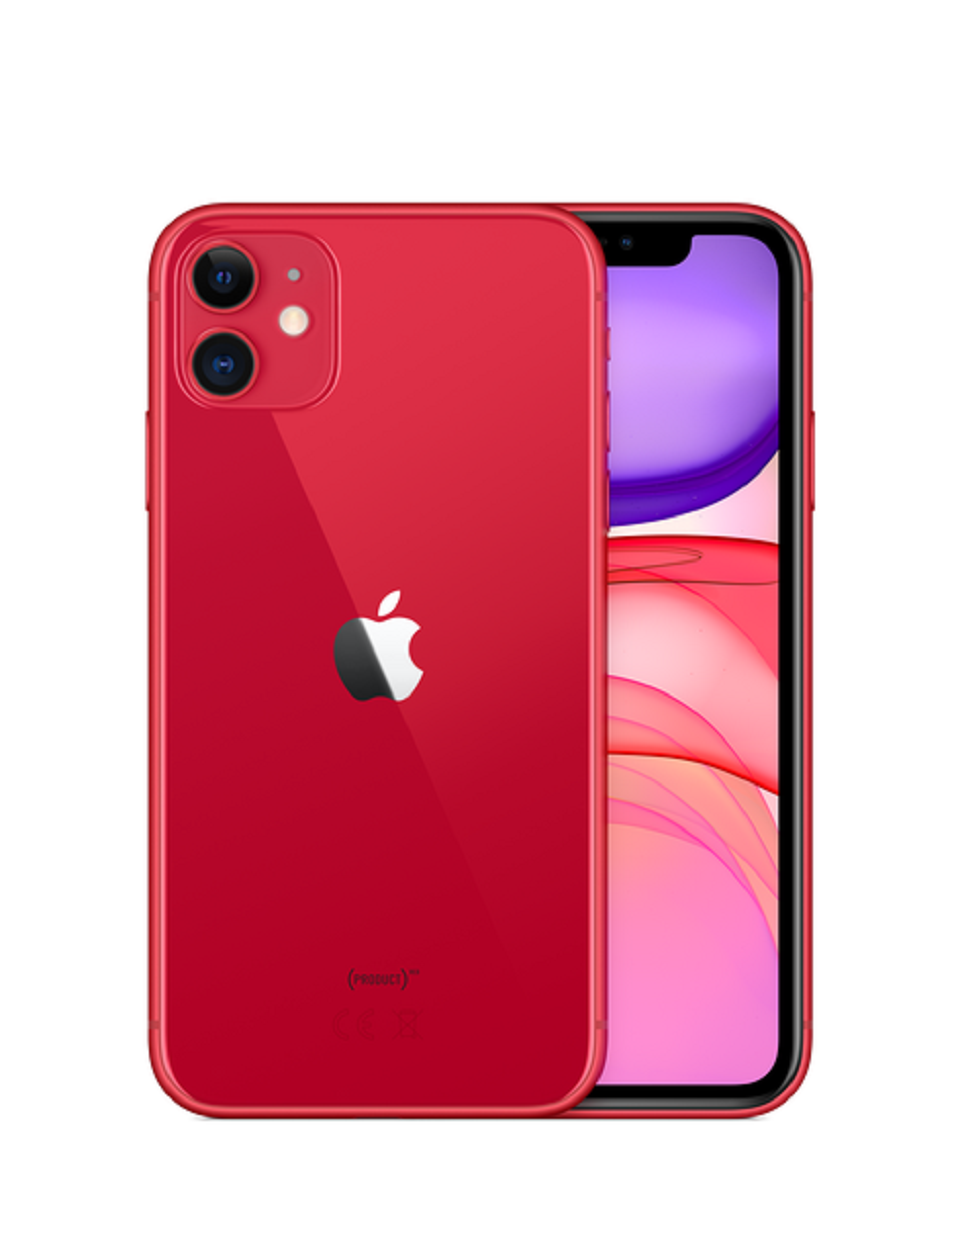 Купить айфон 11 в нижнем новгороде. Apple iphone 11 128gb (product)Red. Iphone 11 64gb Red. Iphone 11 64 ГБ. Apple iphone 11 64gb красный.